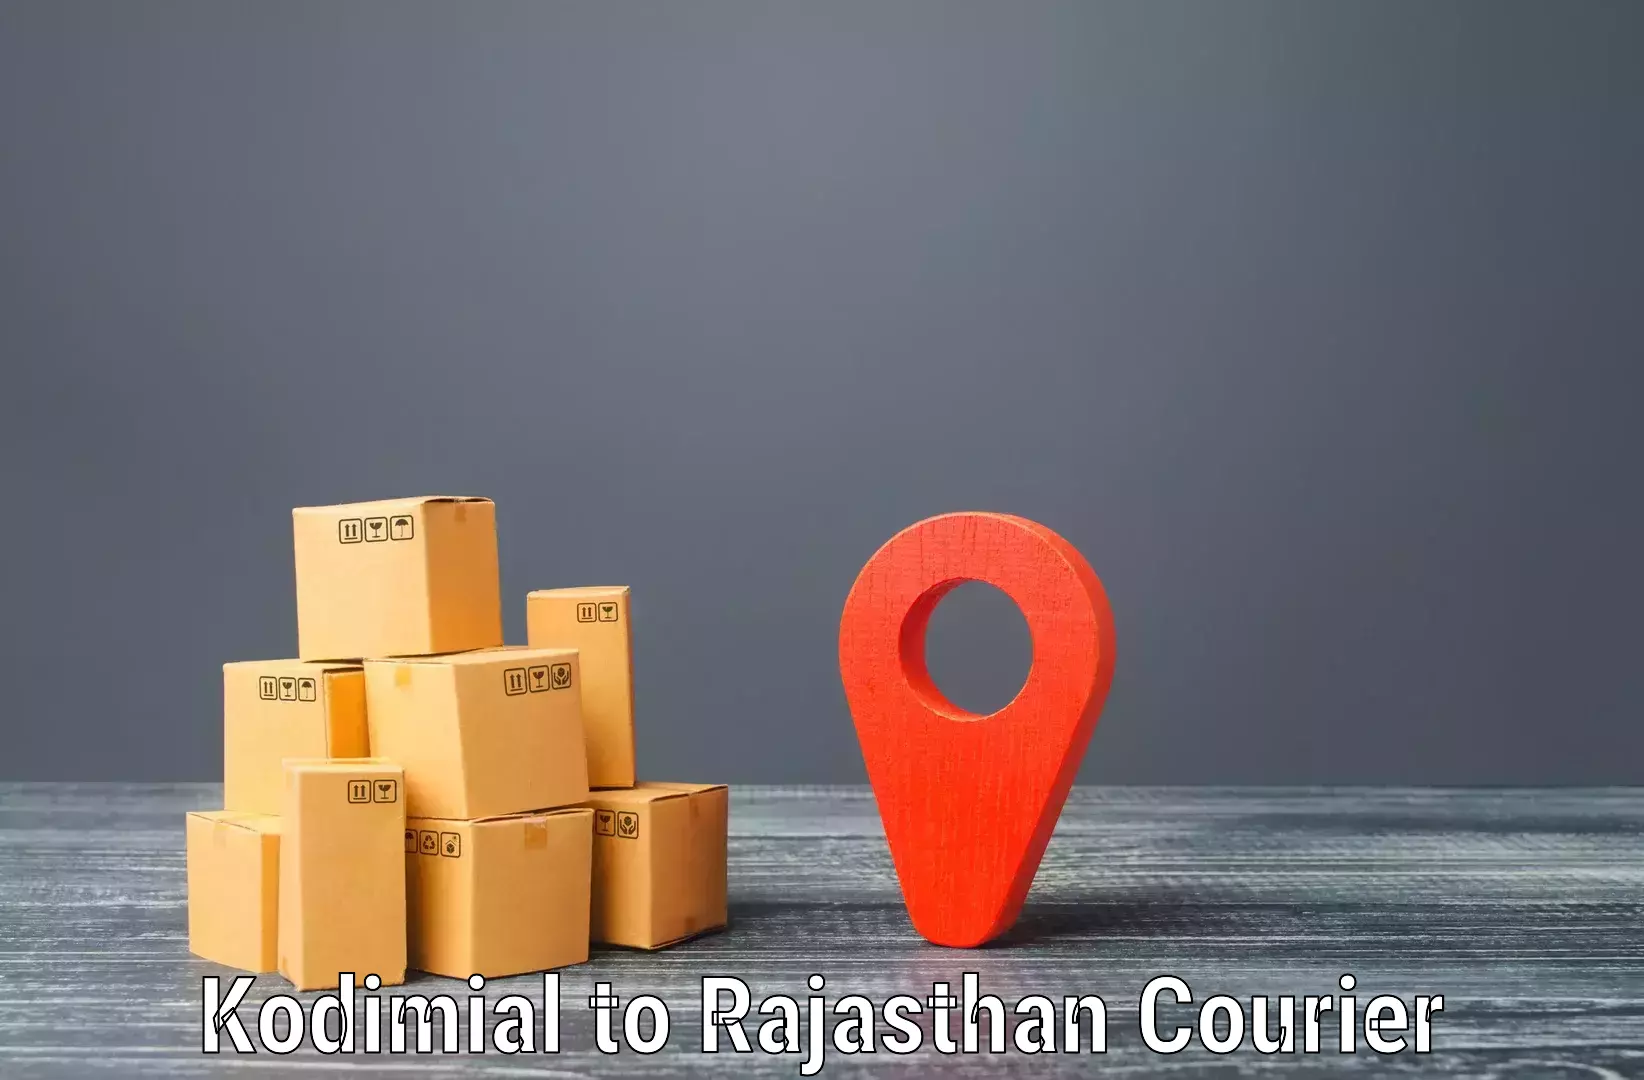 Courier service partnerships Kodimial to Kaman